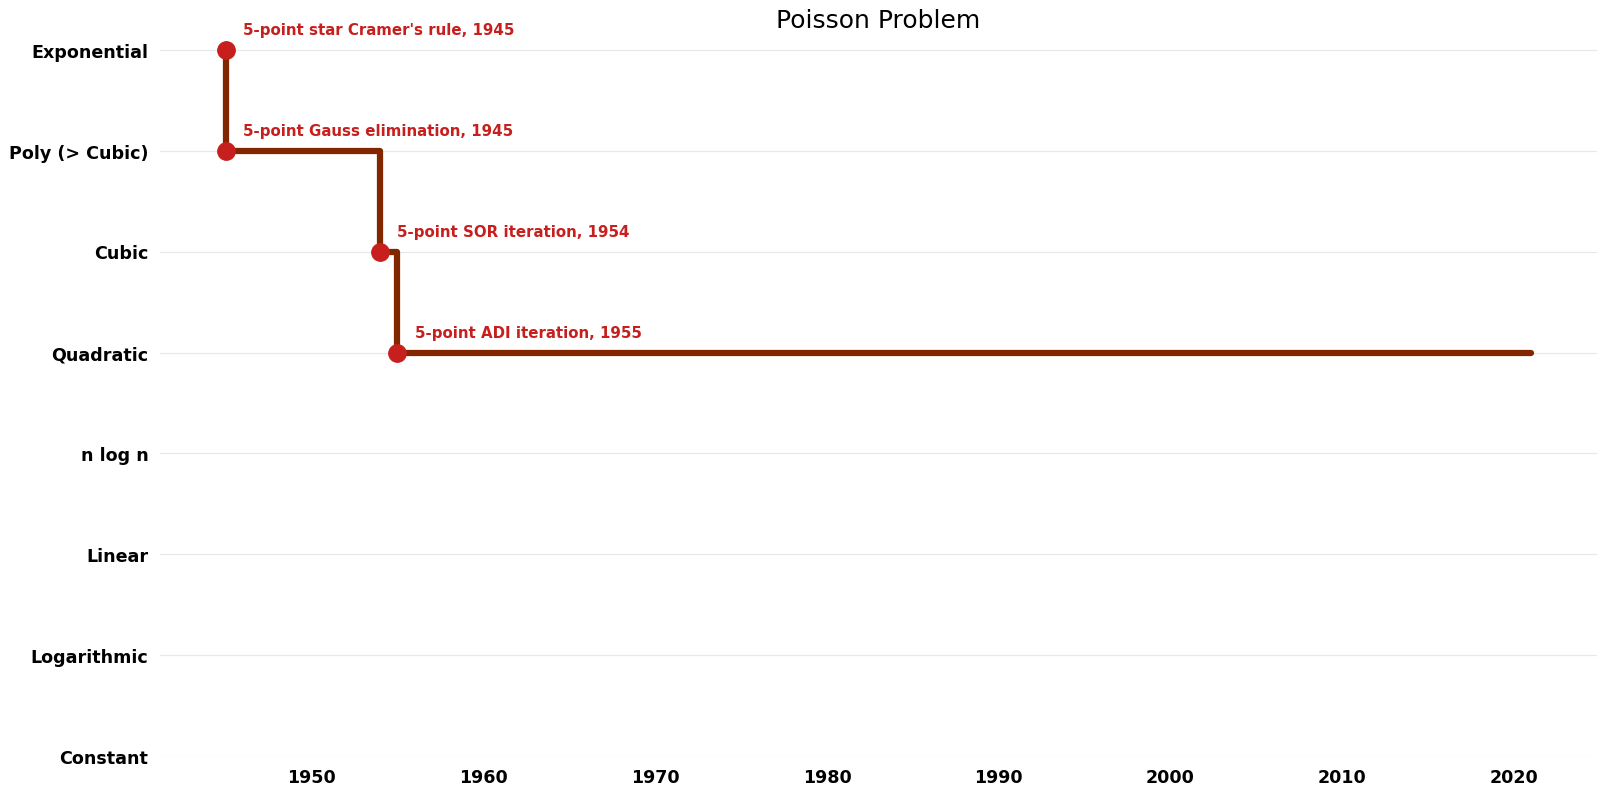 Poisson Problem - Time.png